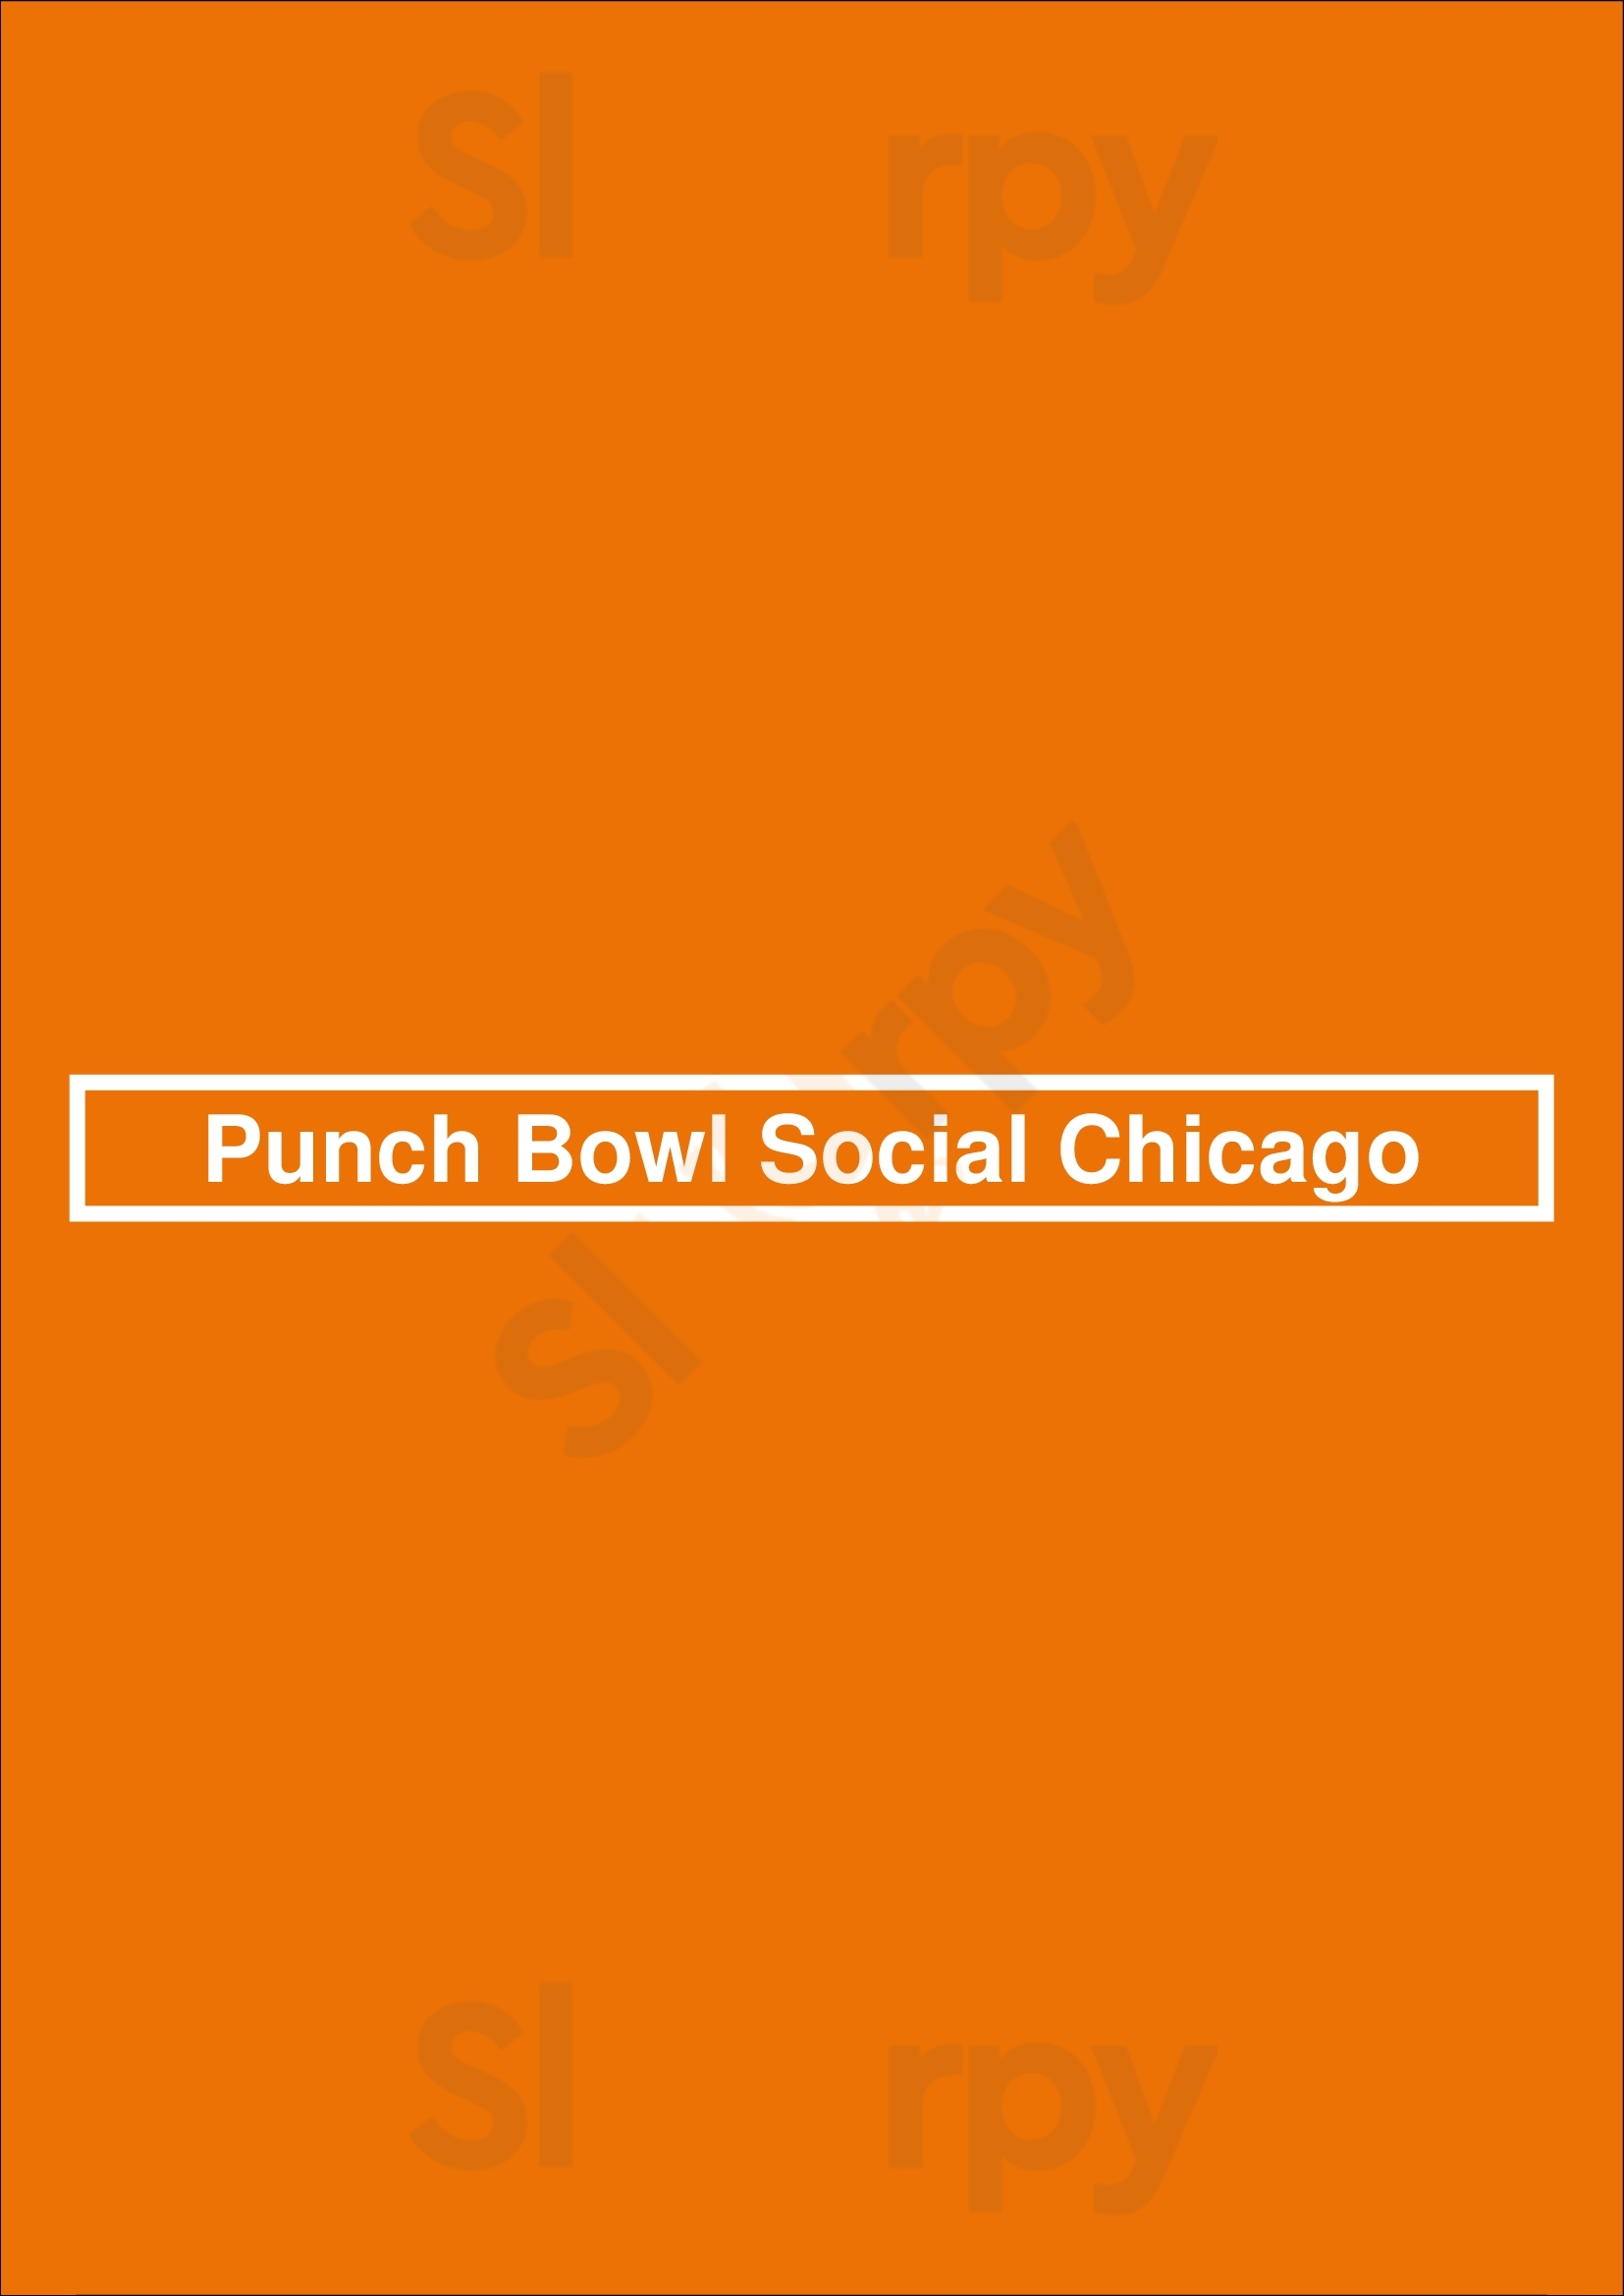 Punch Bowl Social Chicago Chicago Menu - 1